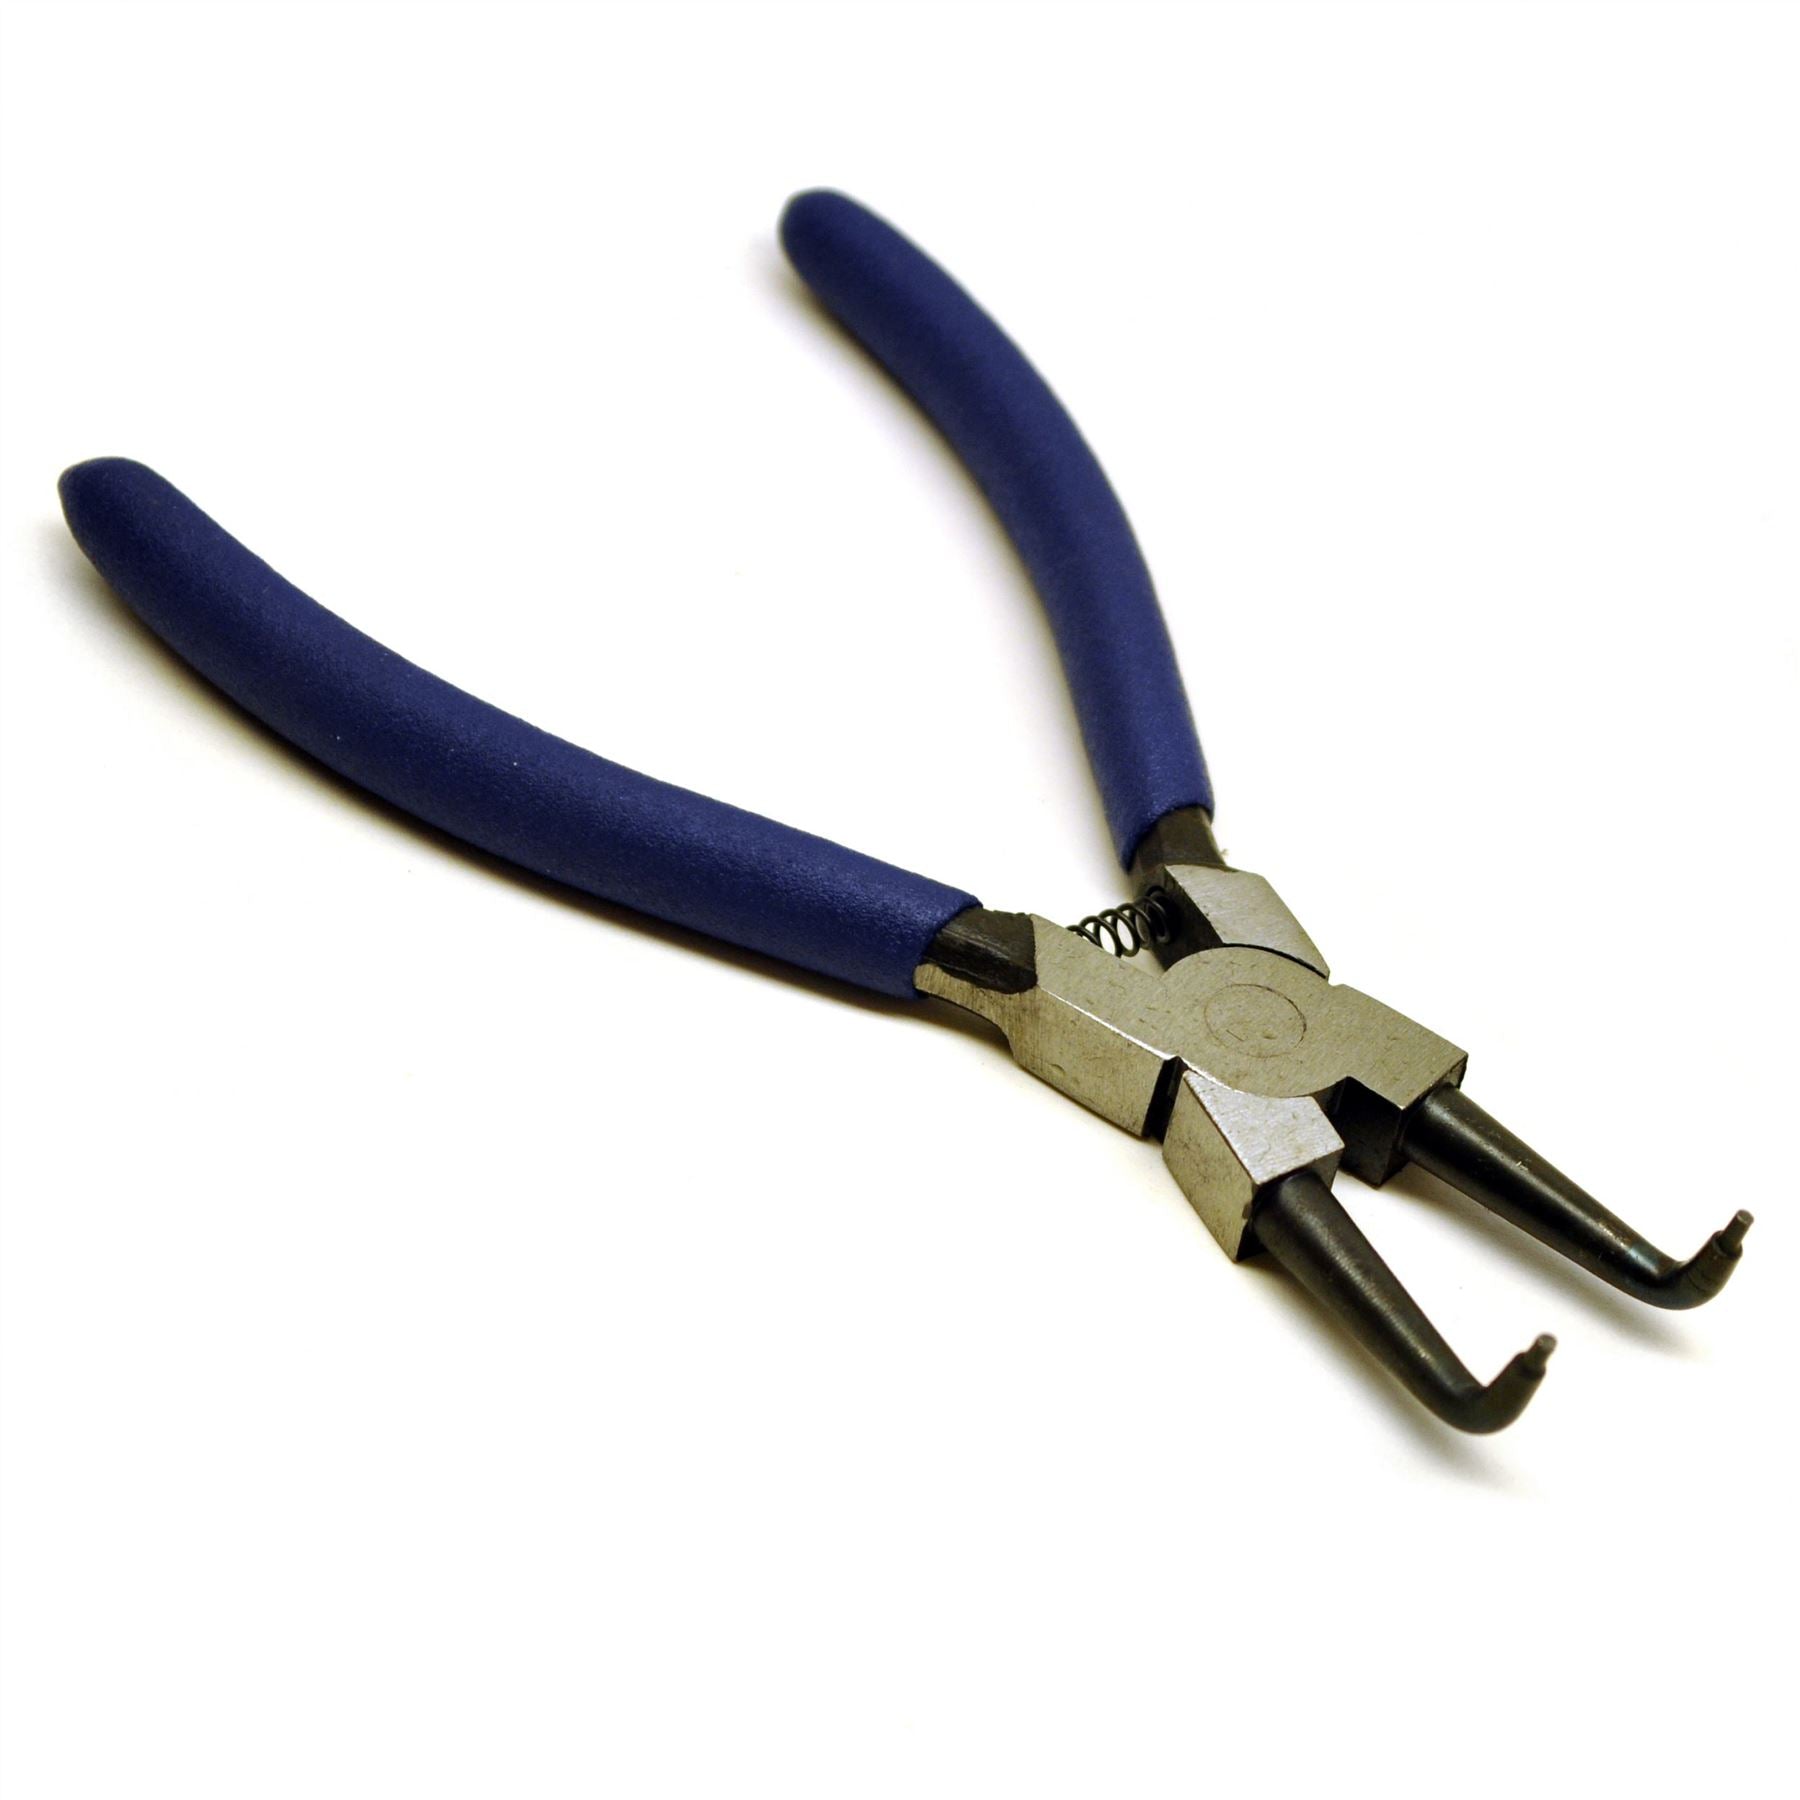 Individual circlip plier internal bent 6" / 150mm with dipped handles TE492